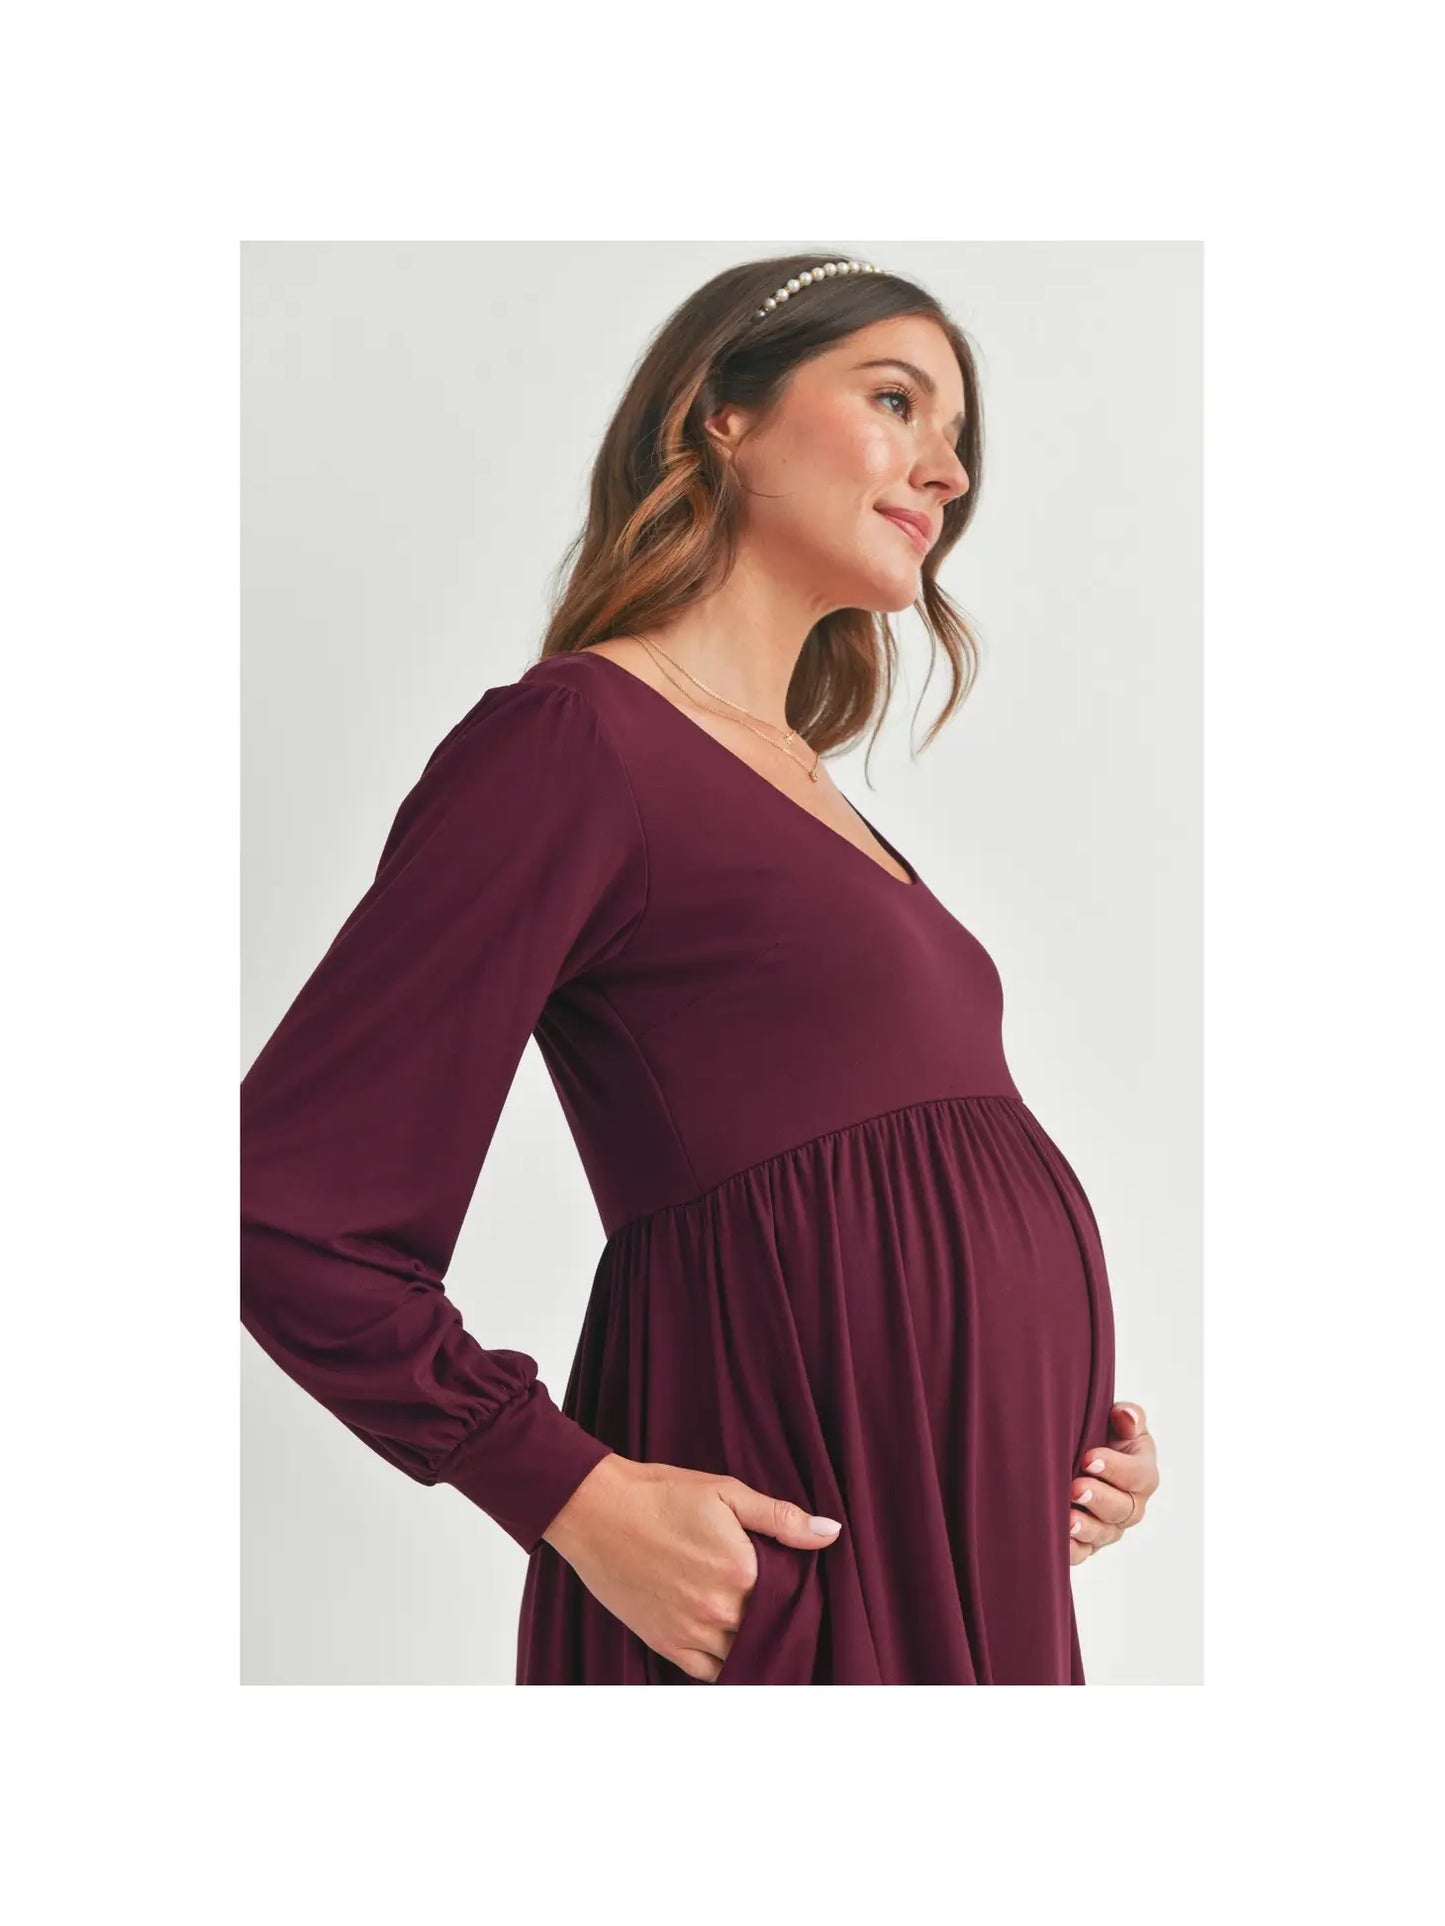 Burgundy Round Neck Front Pleat Maternity Dress